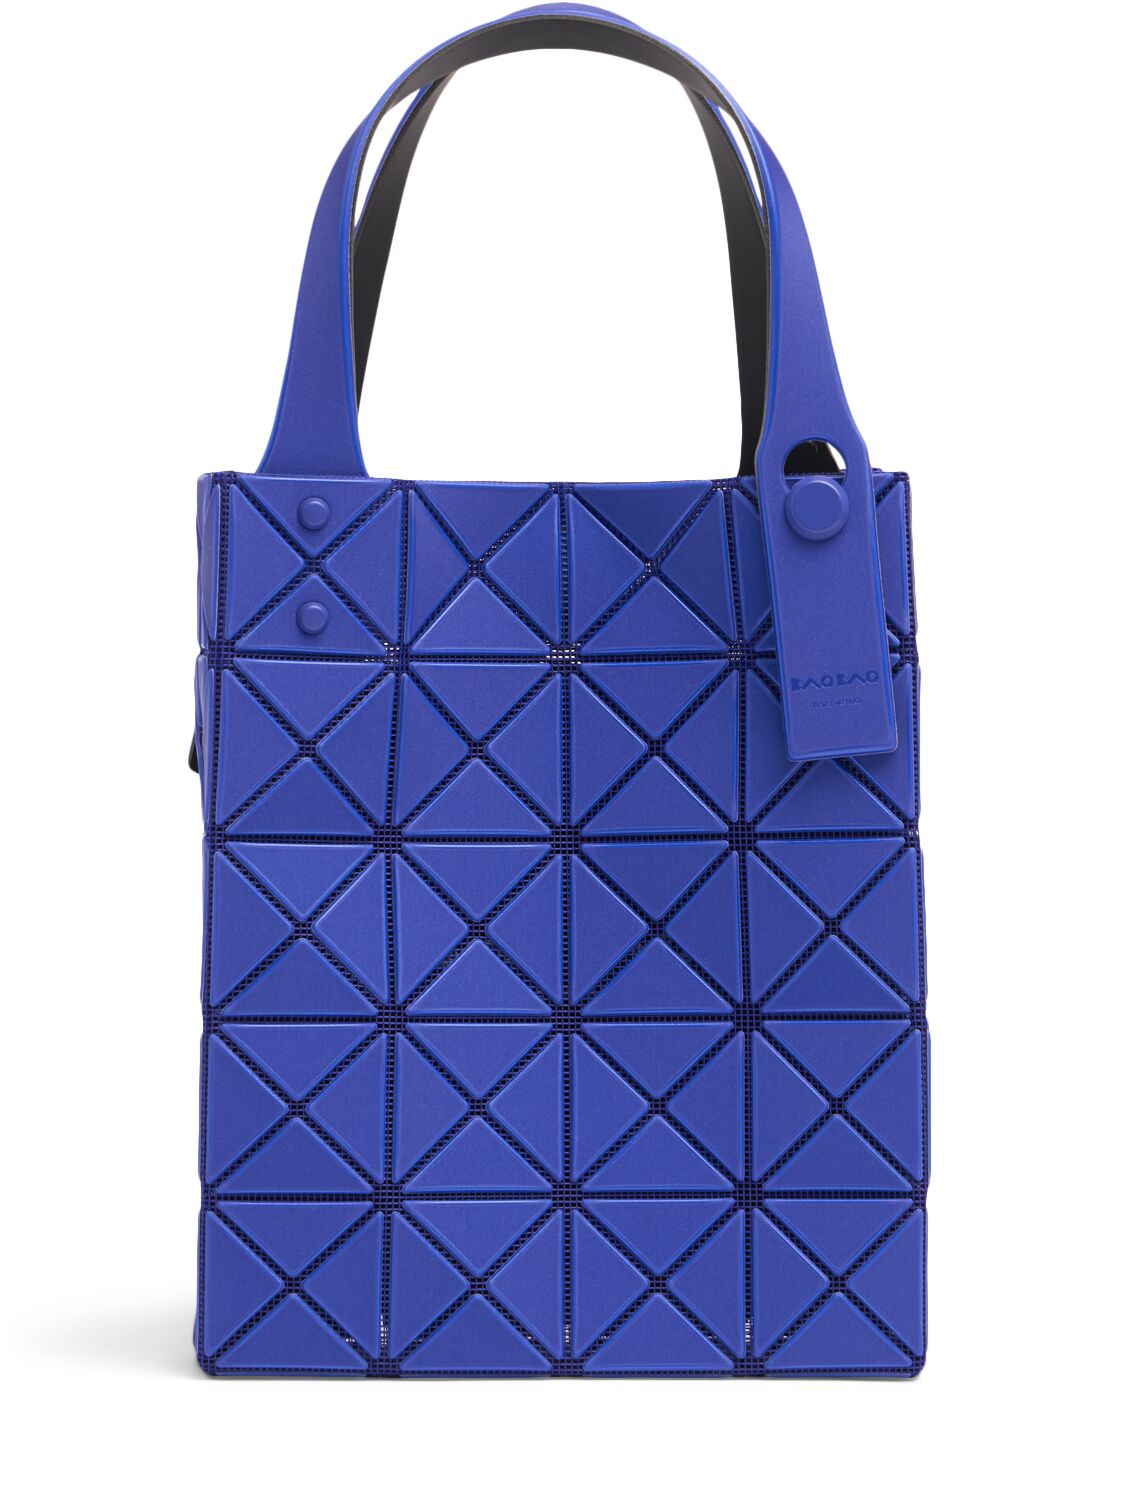 Bao Bao Issey Miyake Prism Plus Top Handle Bag In Royal Blue